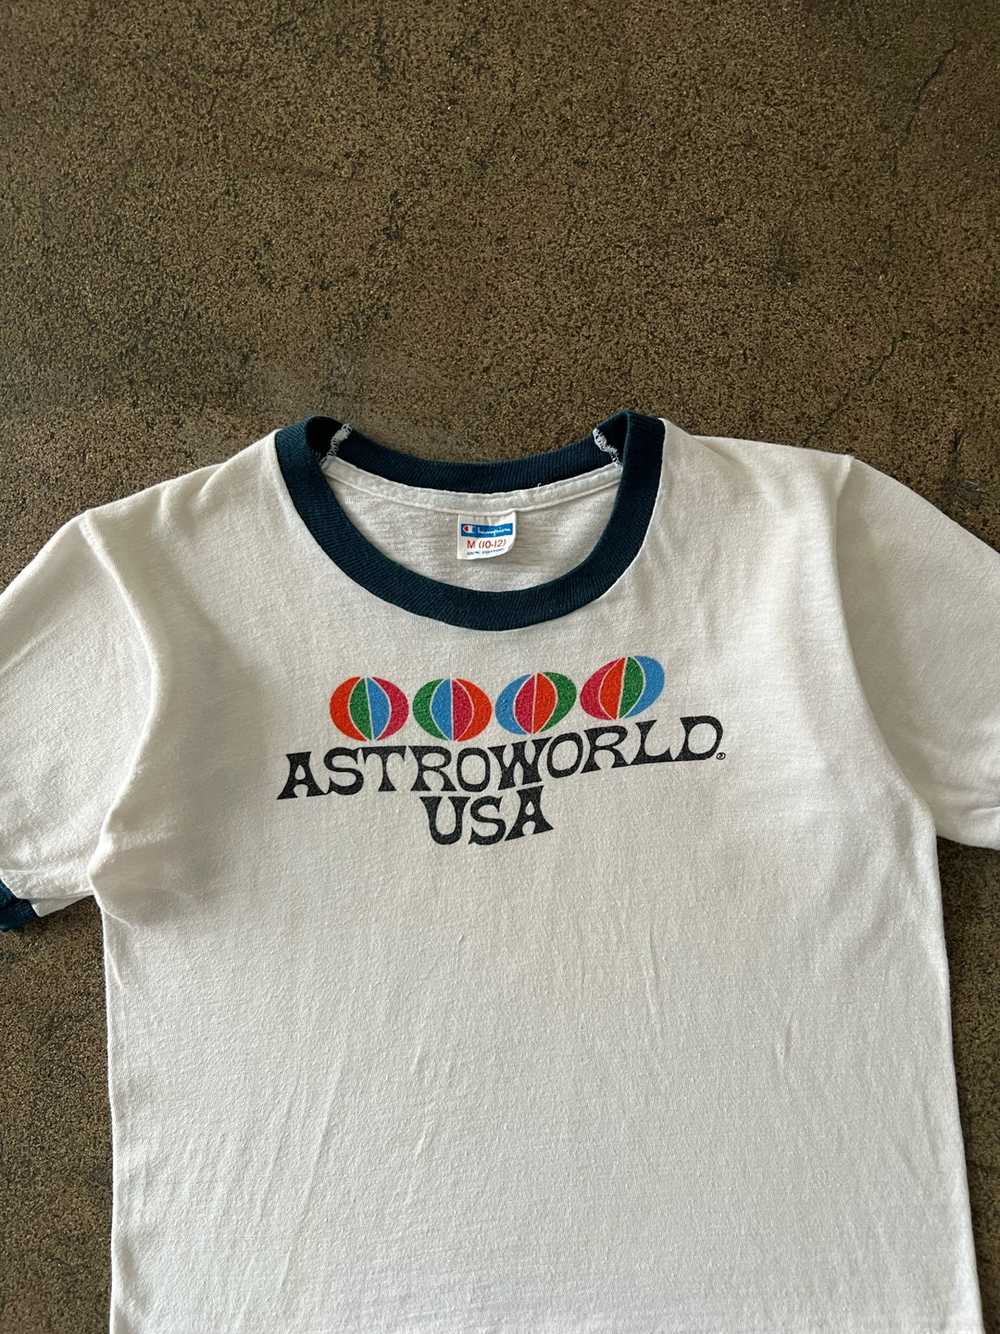 1970s Champion Astroworld Ringer Baby Tee - image 2